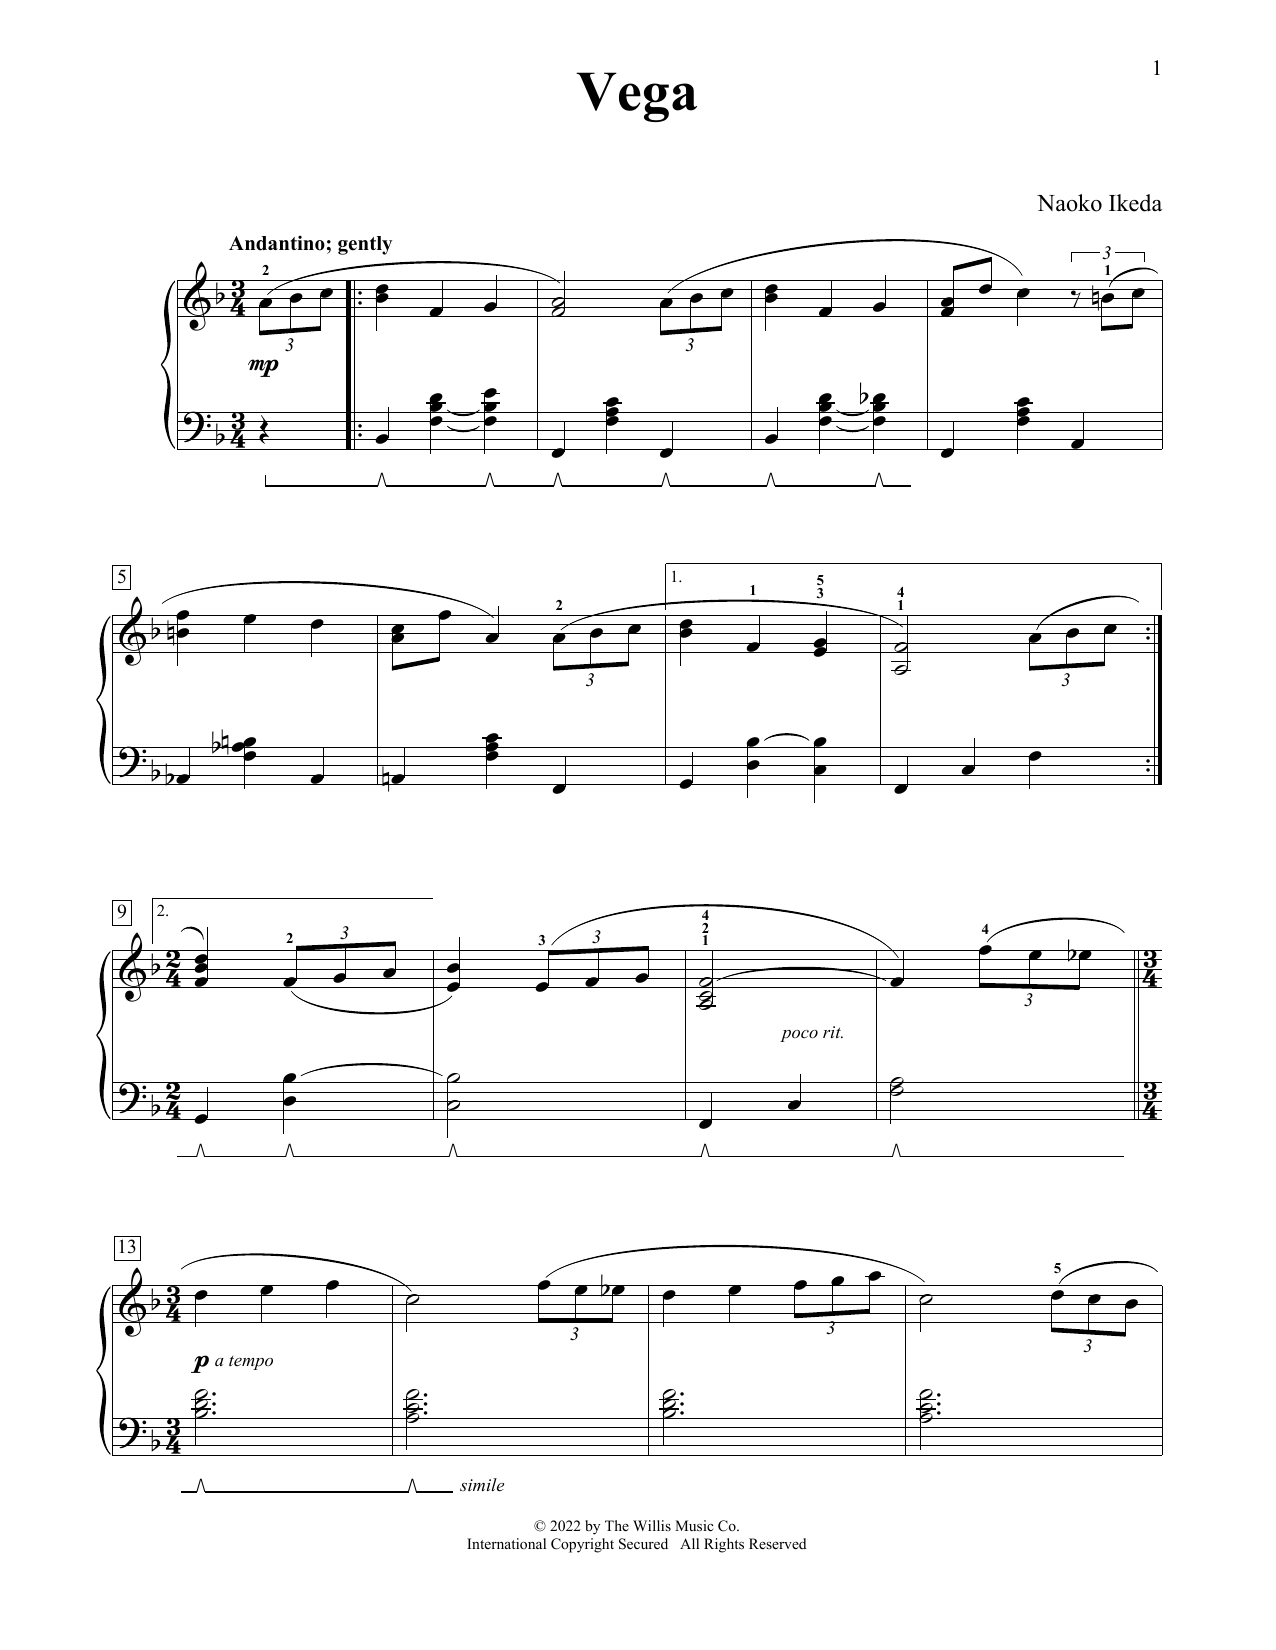 Naoko Ikeda Vega Sheet Music Notes & Chords for Educational Piano - Download or Print PDF